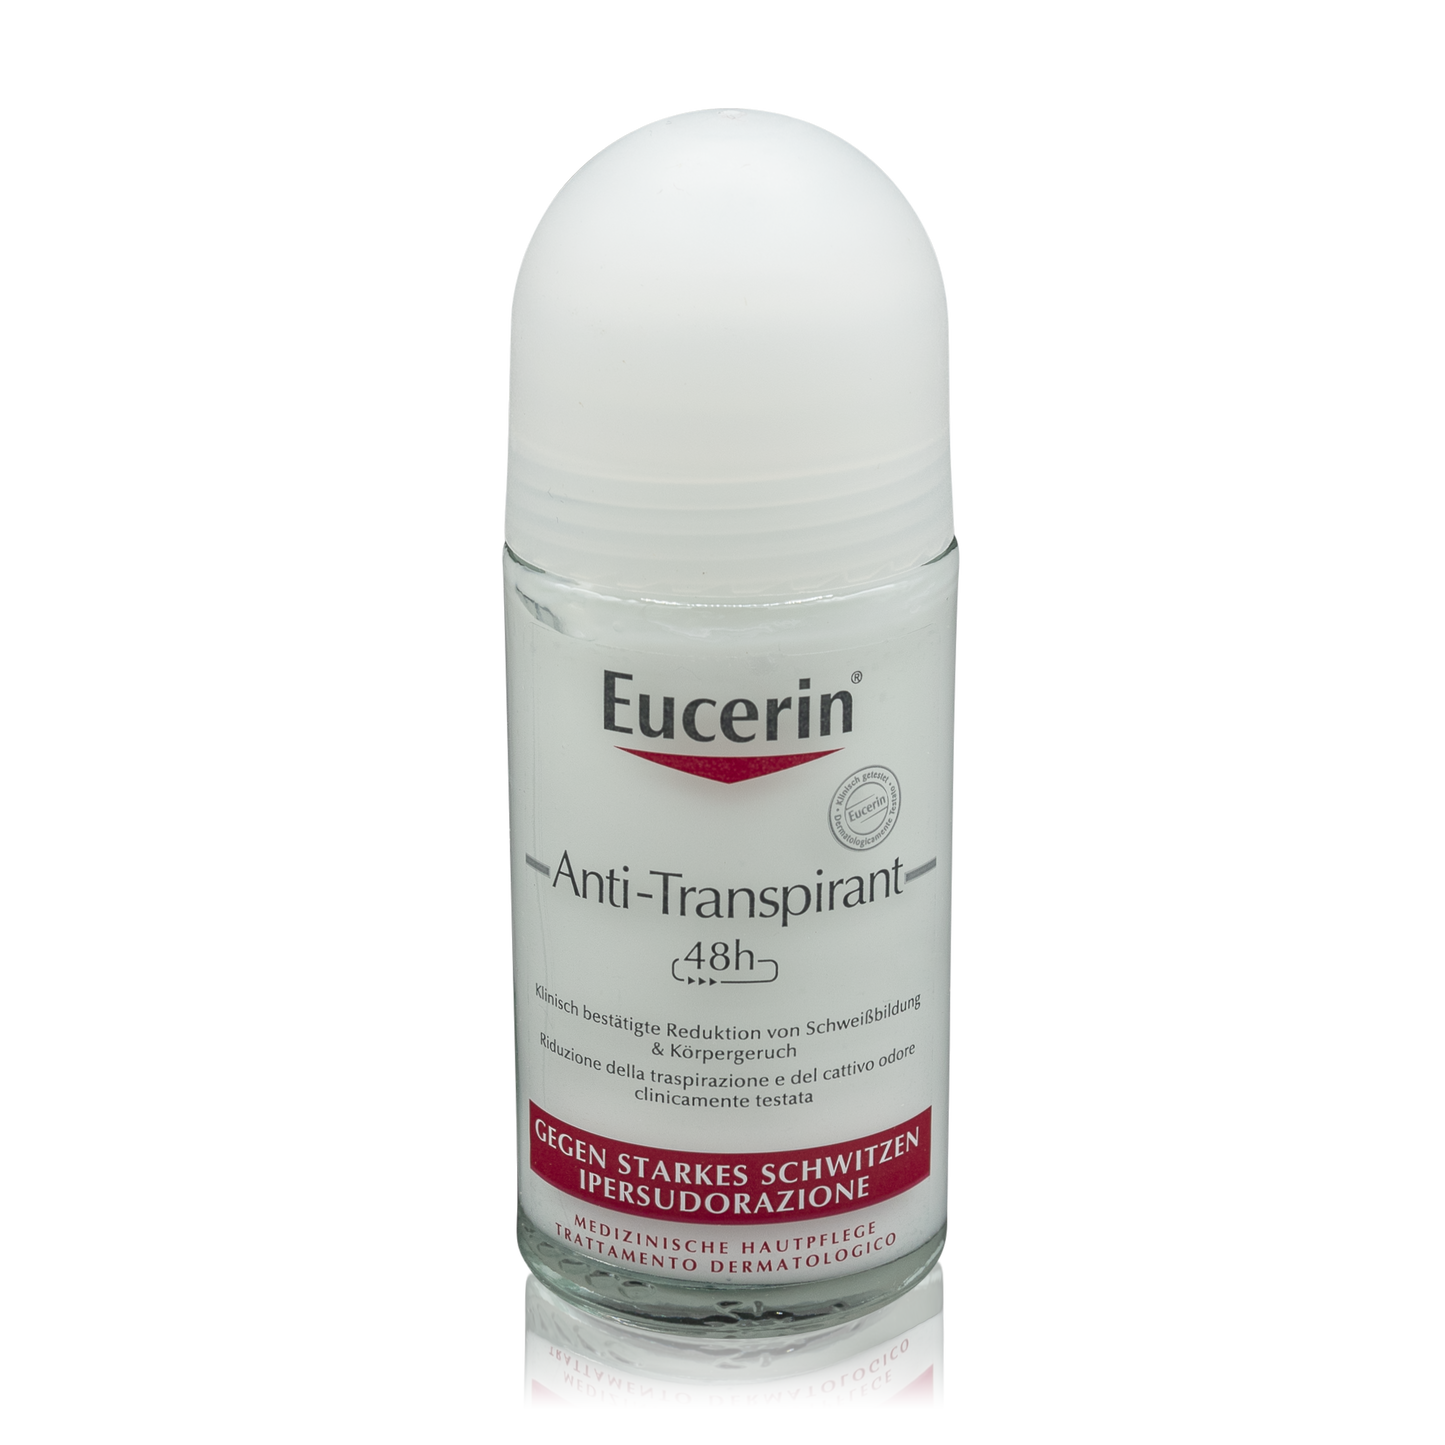 Eucerin Anti-Transpirant 48h gegen starkes Schwitzen - Roll-On (50ml) - PZN: 9284370 - RoTe Place